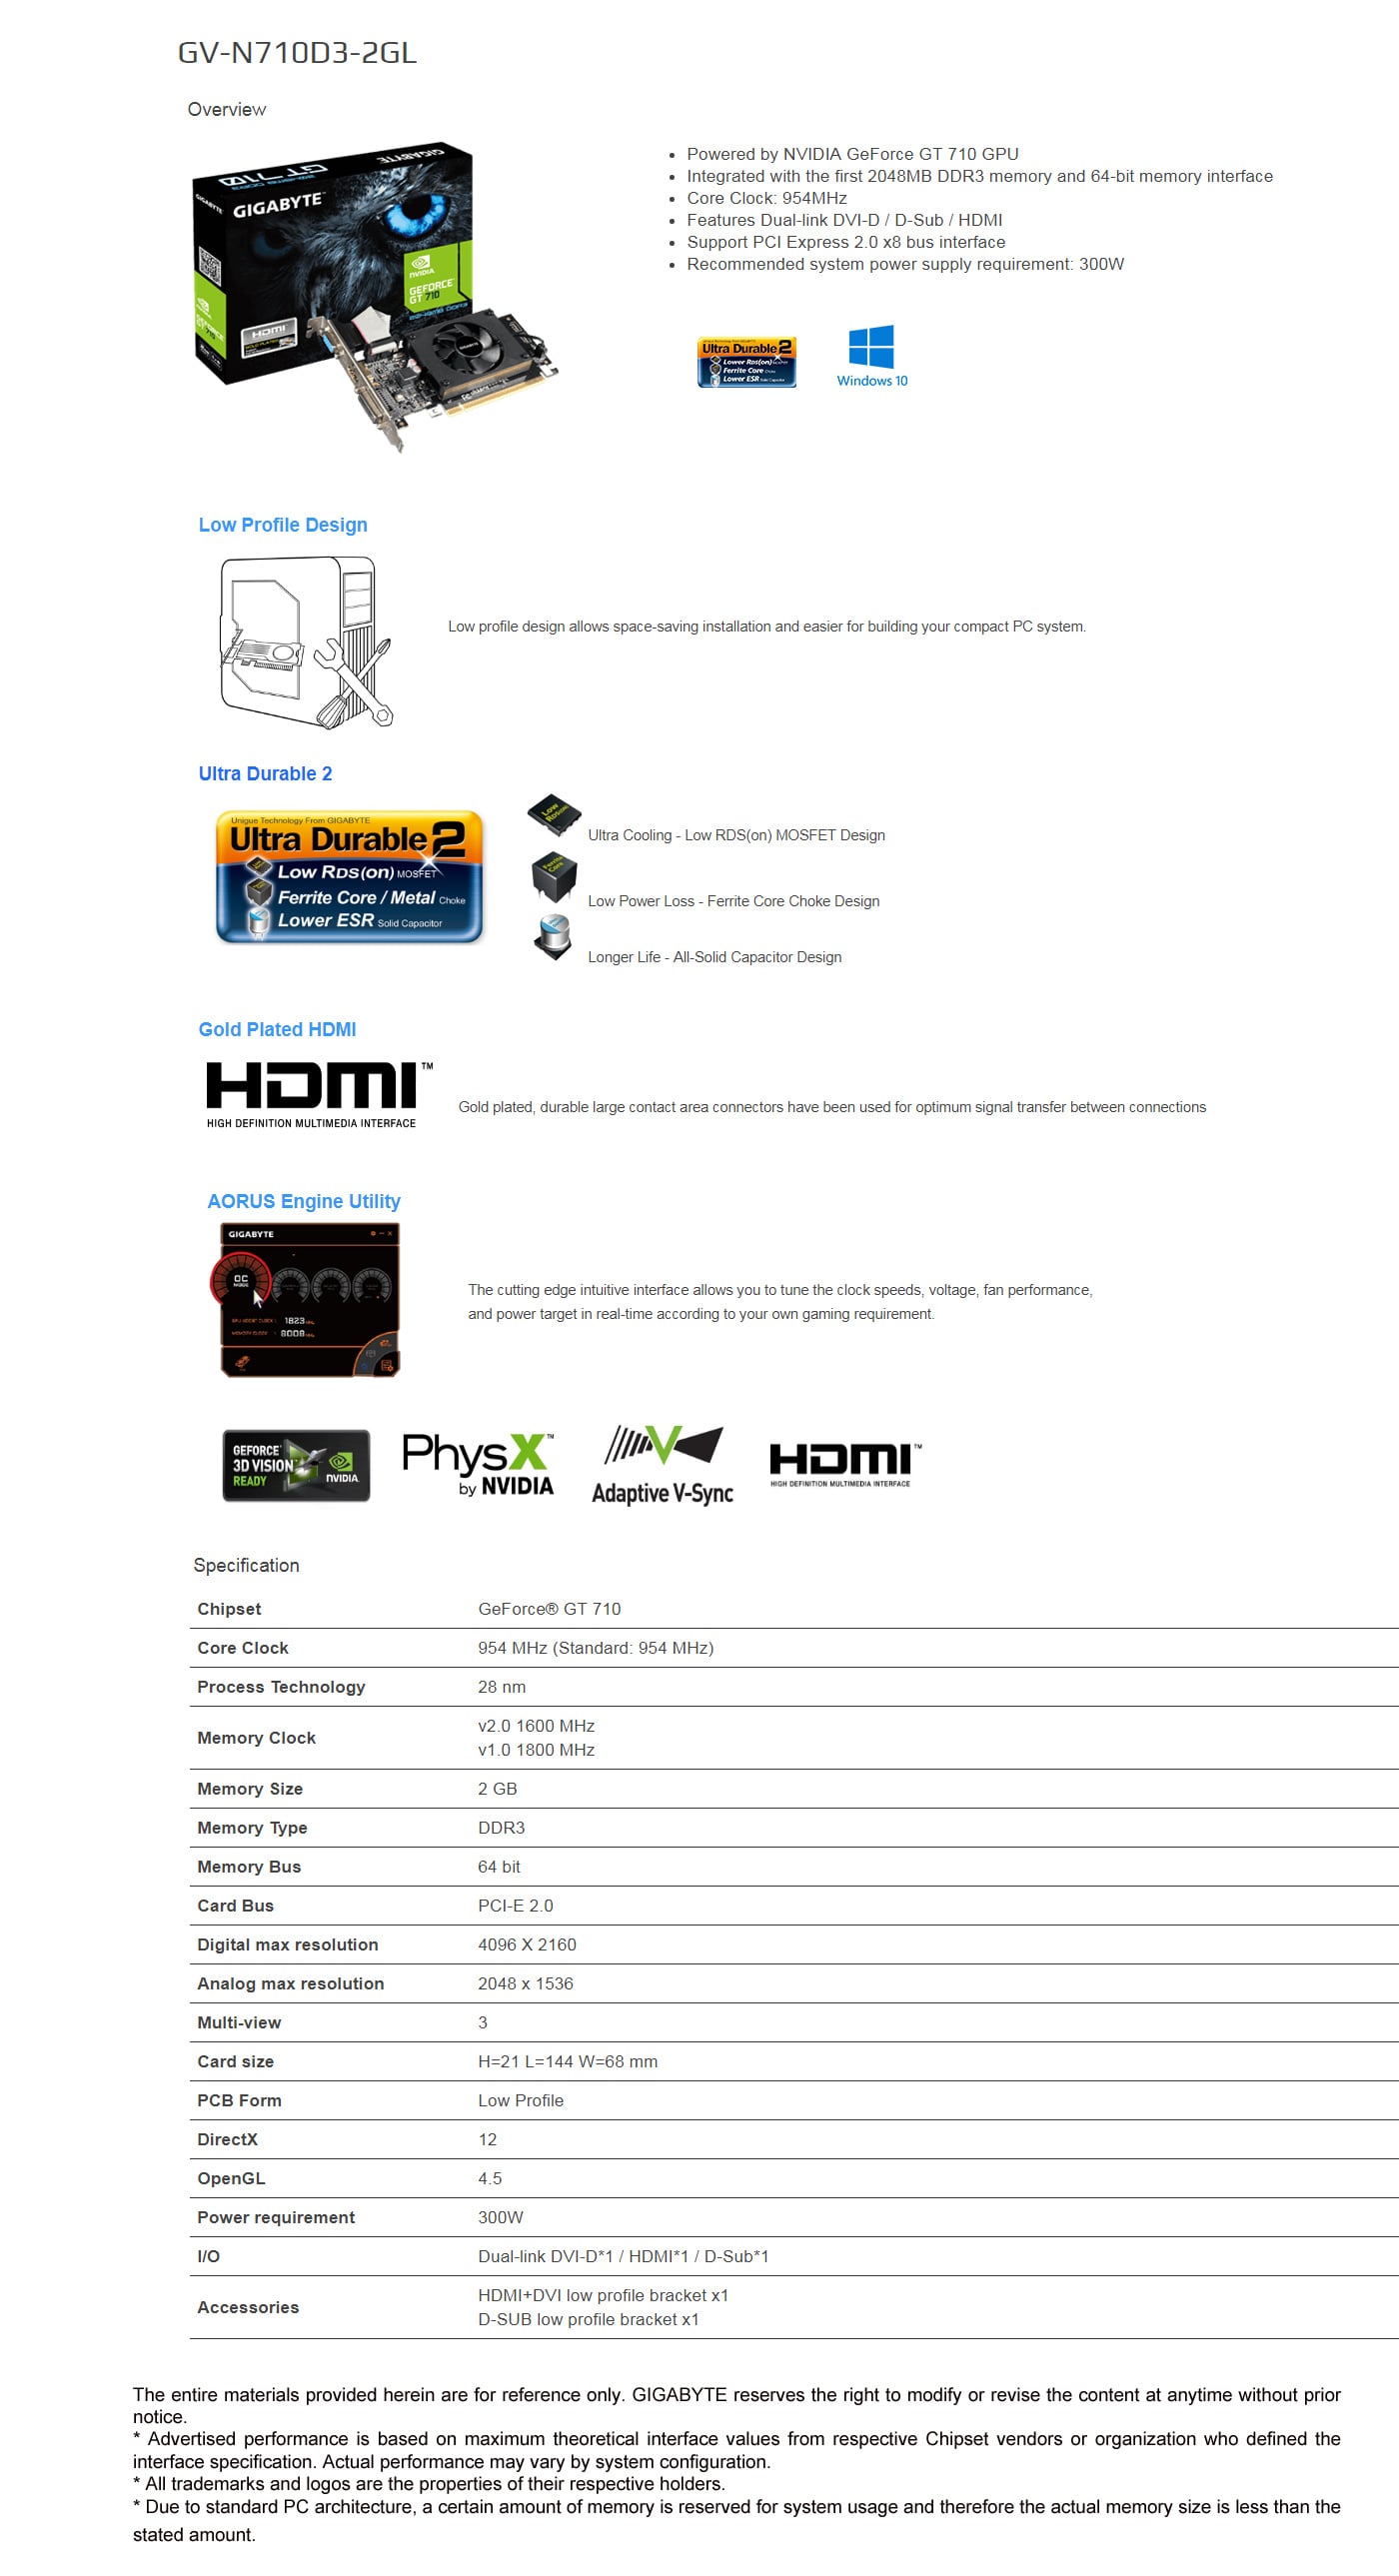 Buy Online Gigabyte Geforce GT 710 2GB DDR3 (GV-N710D3-2GL)